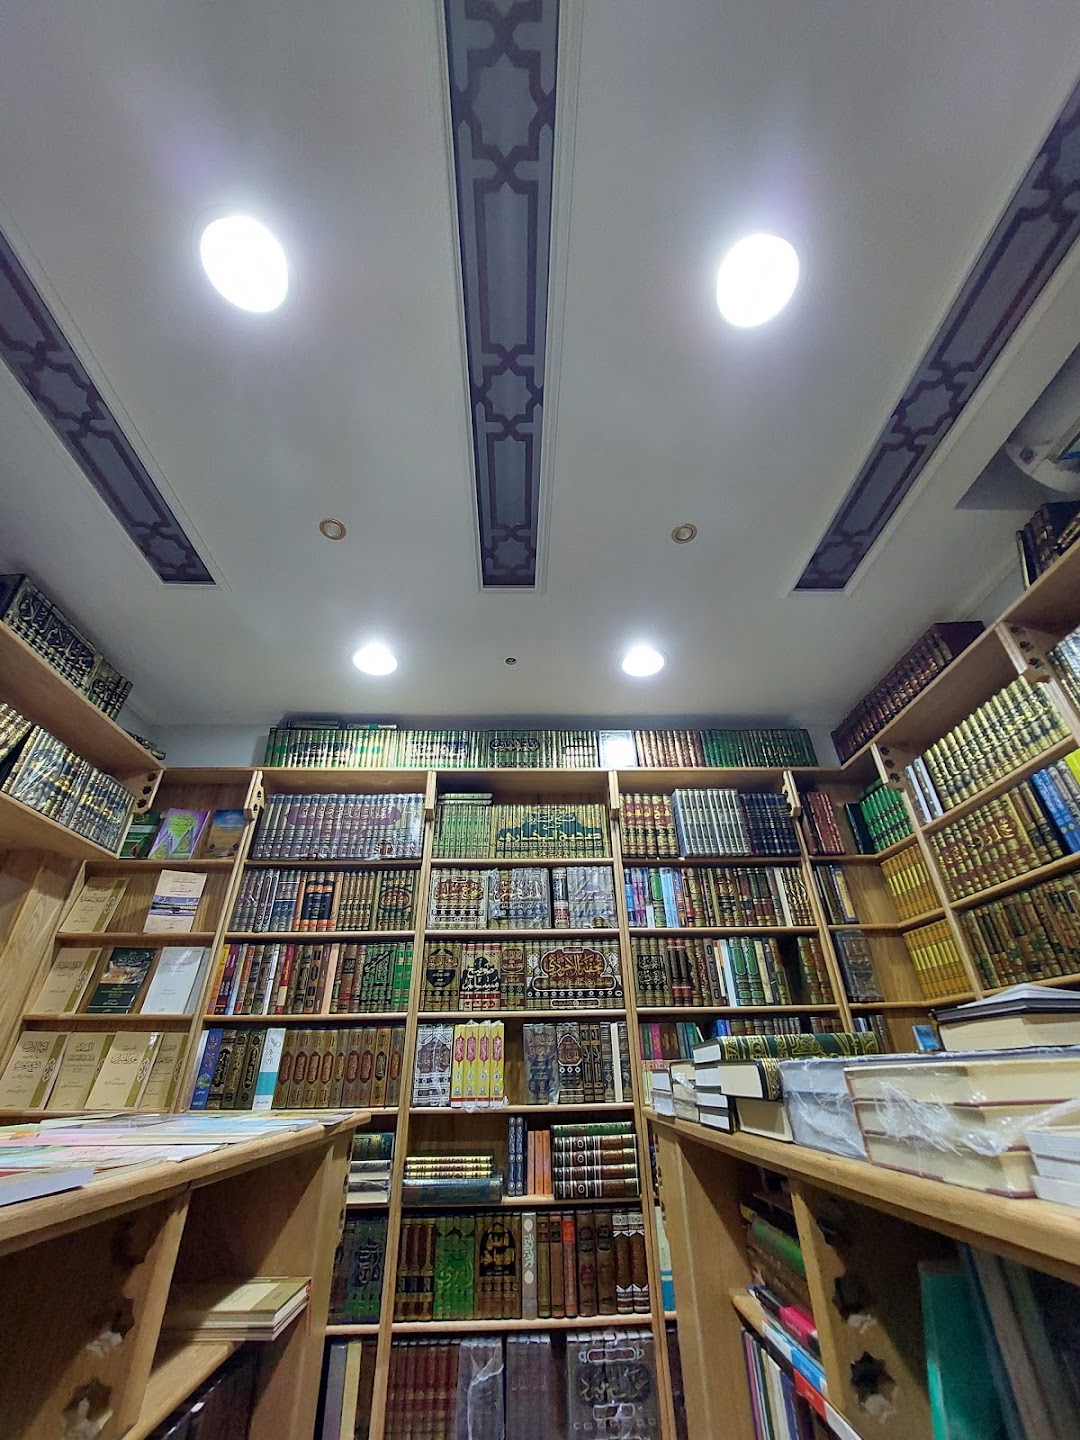 Dar Al Salam For Printing, Publishing, Distribution & Translation